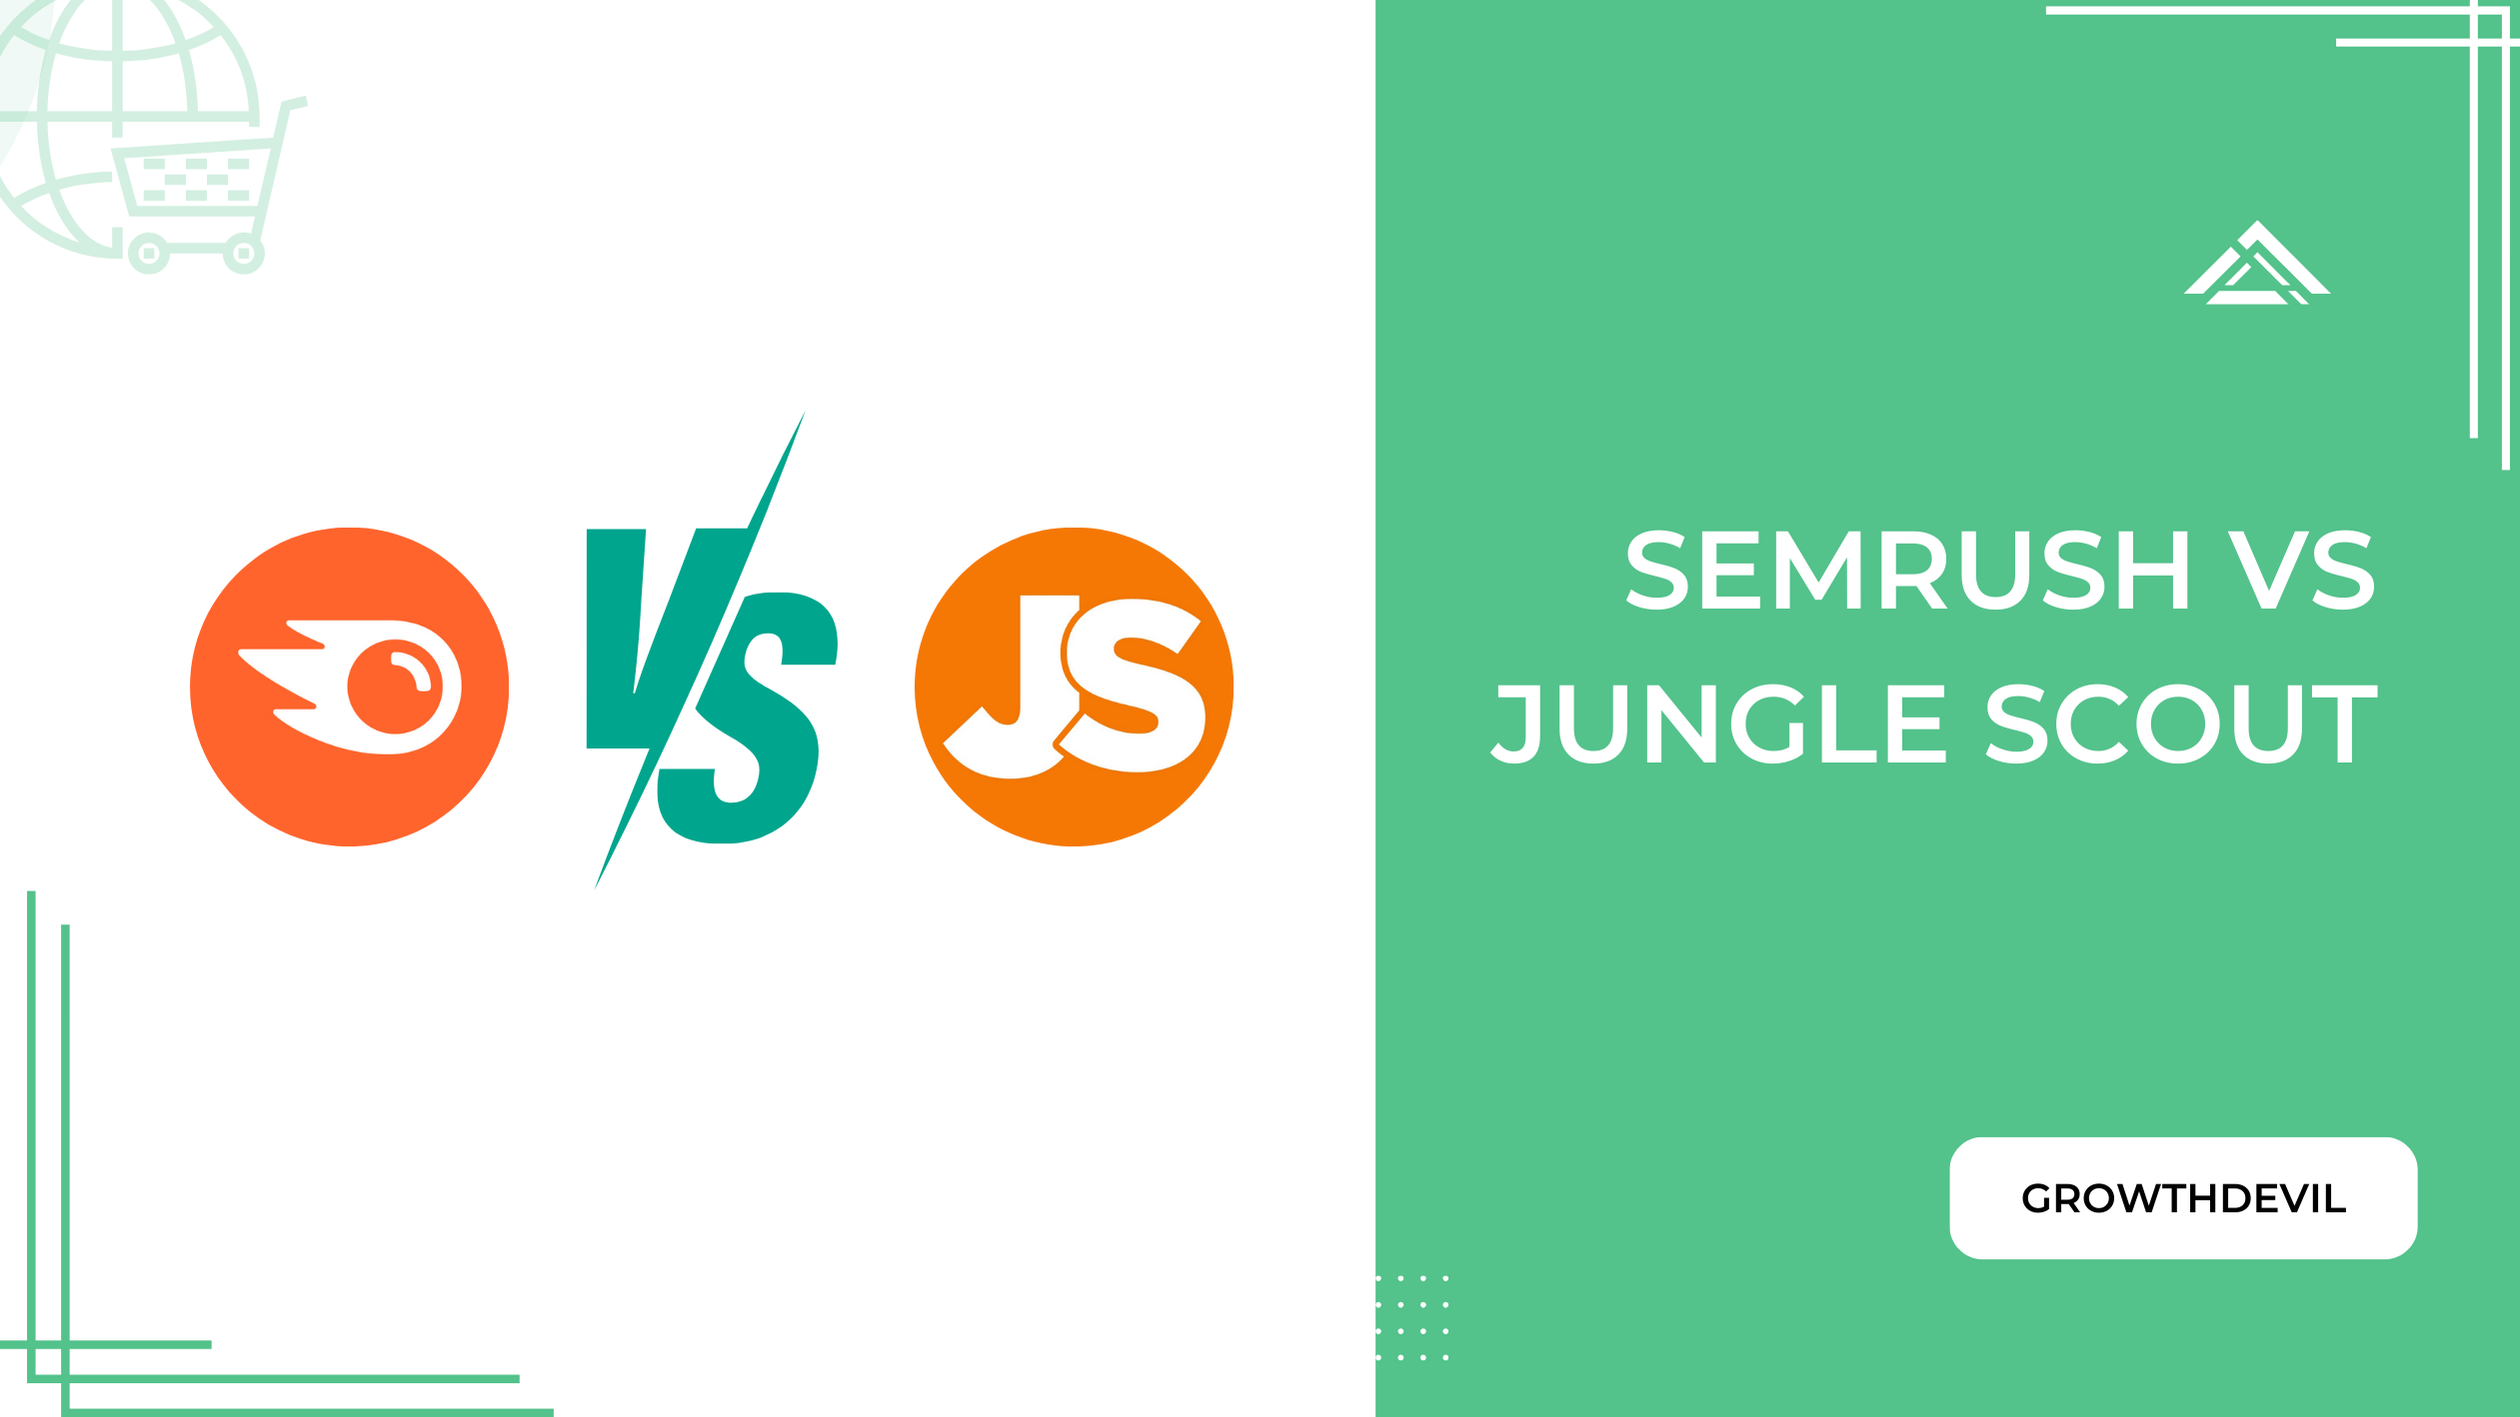 Semrush vs Jungle Scout